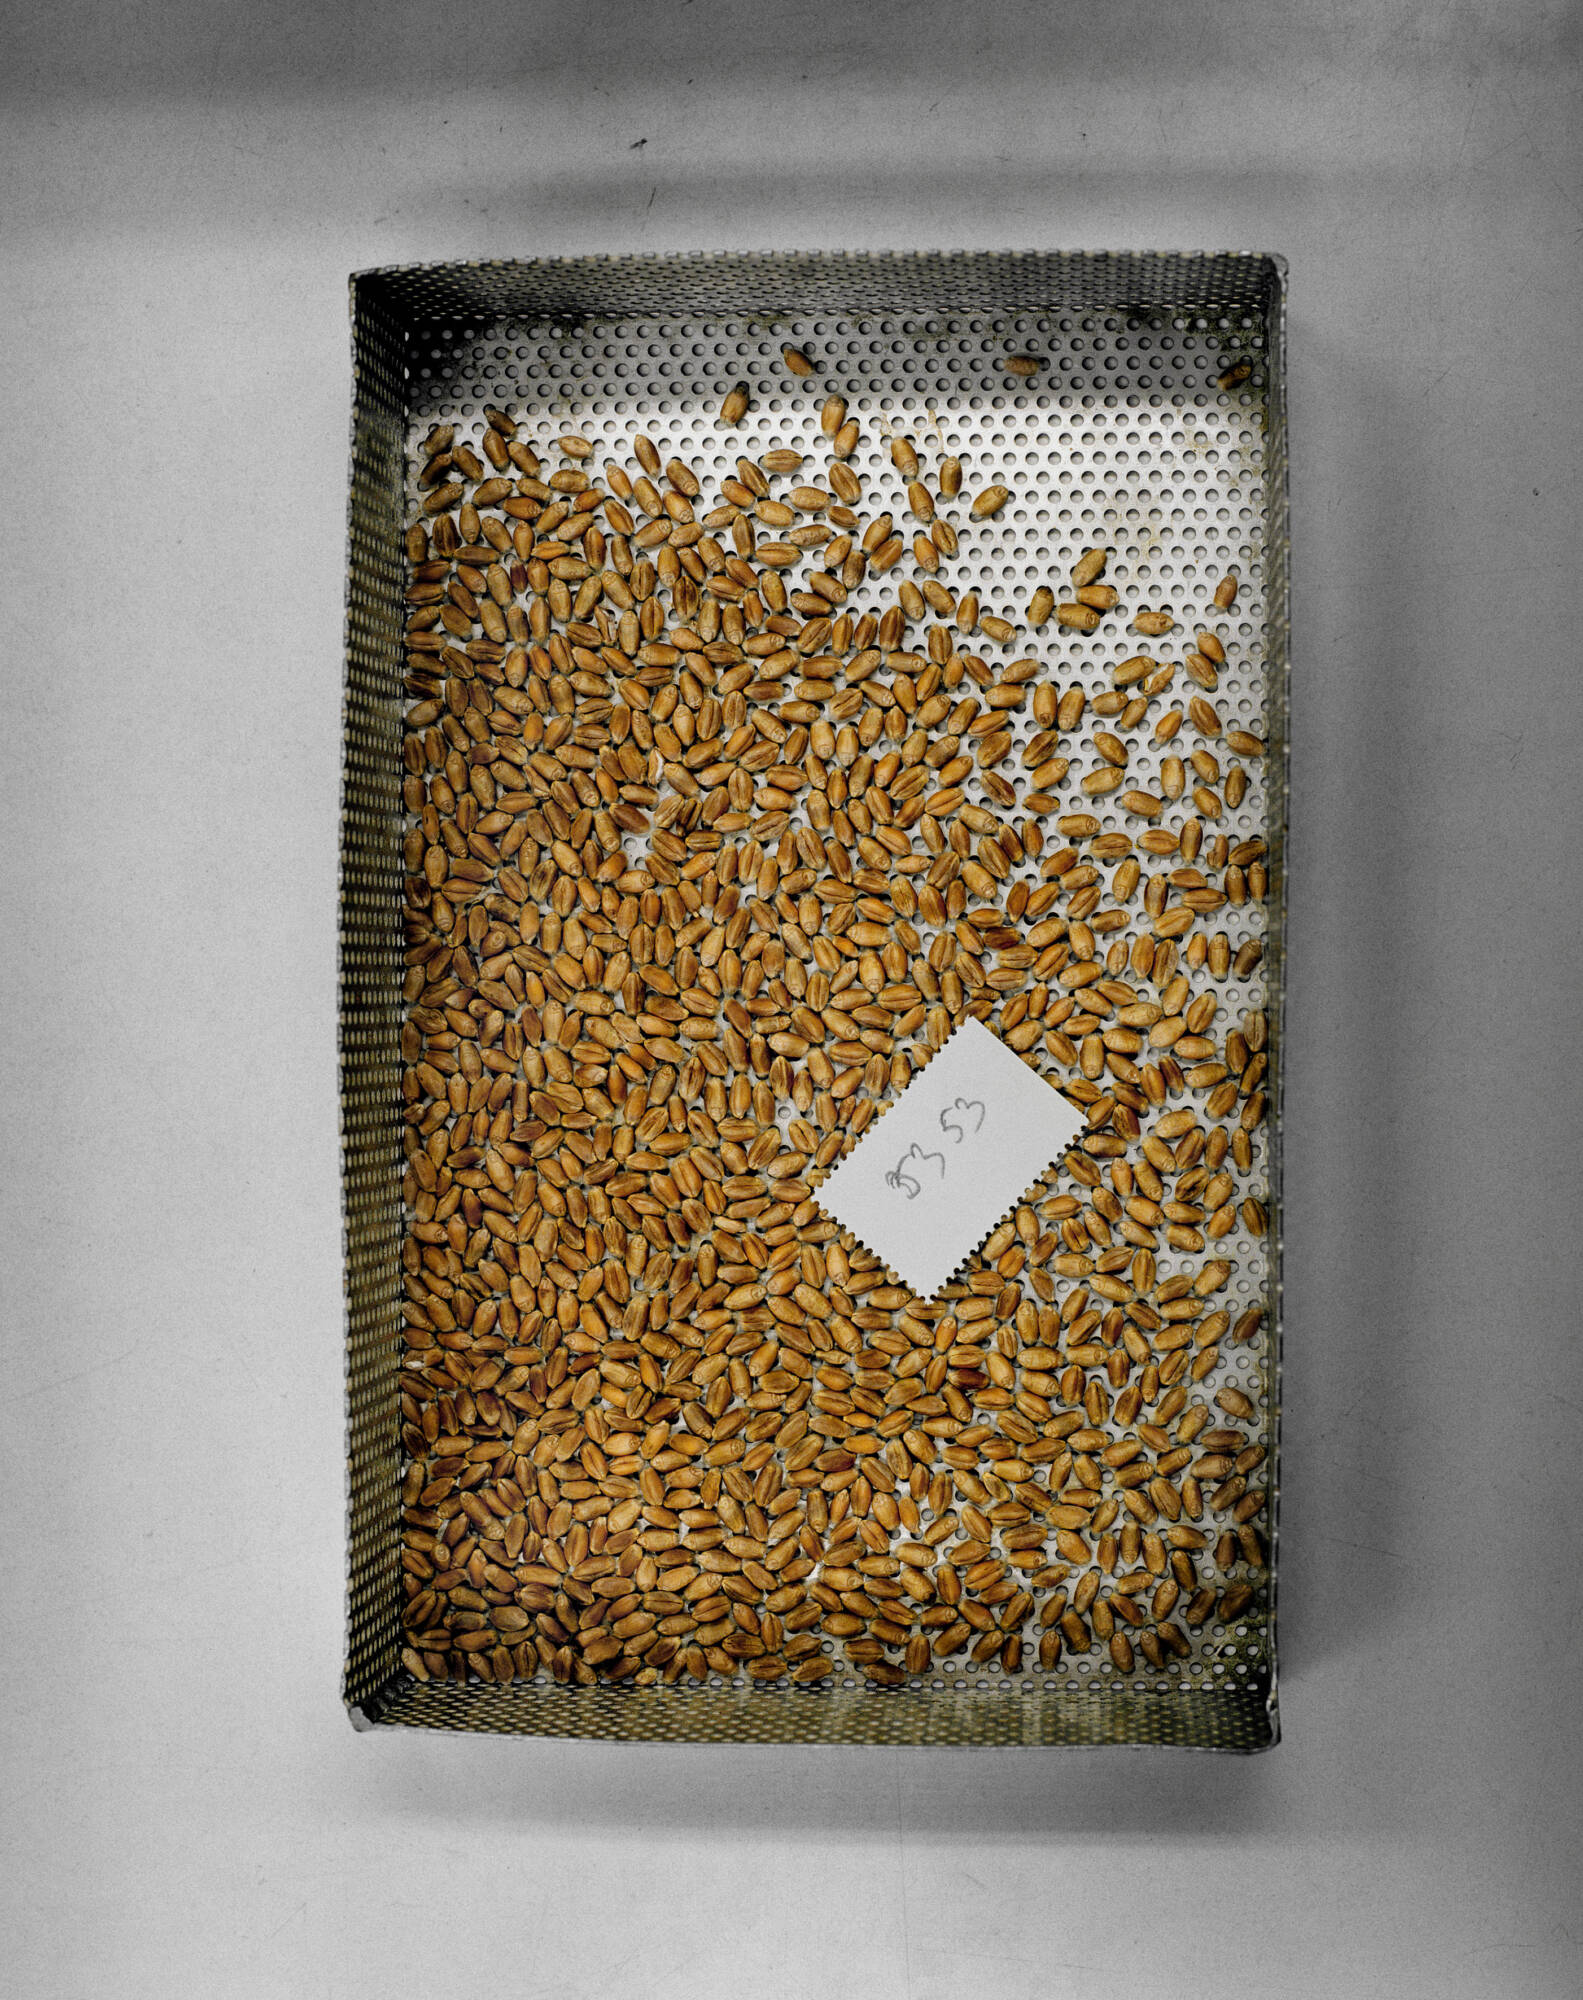 Artist Yann Mingard presenting his series "Deposit" at Parrotta Contemporary Art Gallery in Cologne and Bonn. Theme: Anthropocene. Winterthur, Folkwang, Steidl, GwinZegal, Florian Ebner, Thomas Seelig